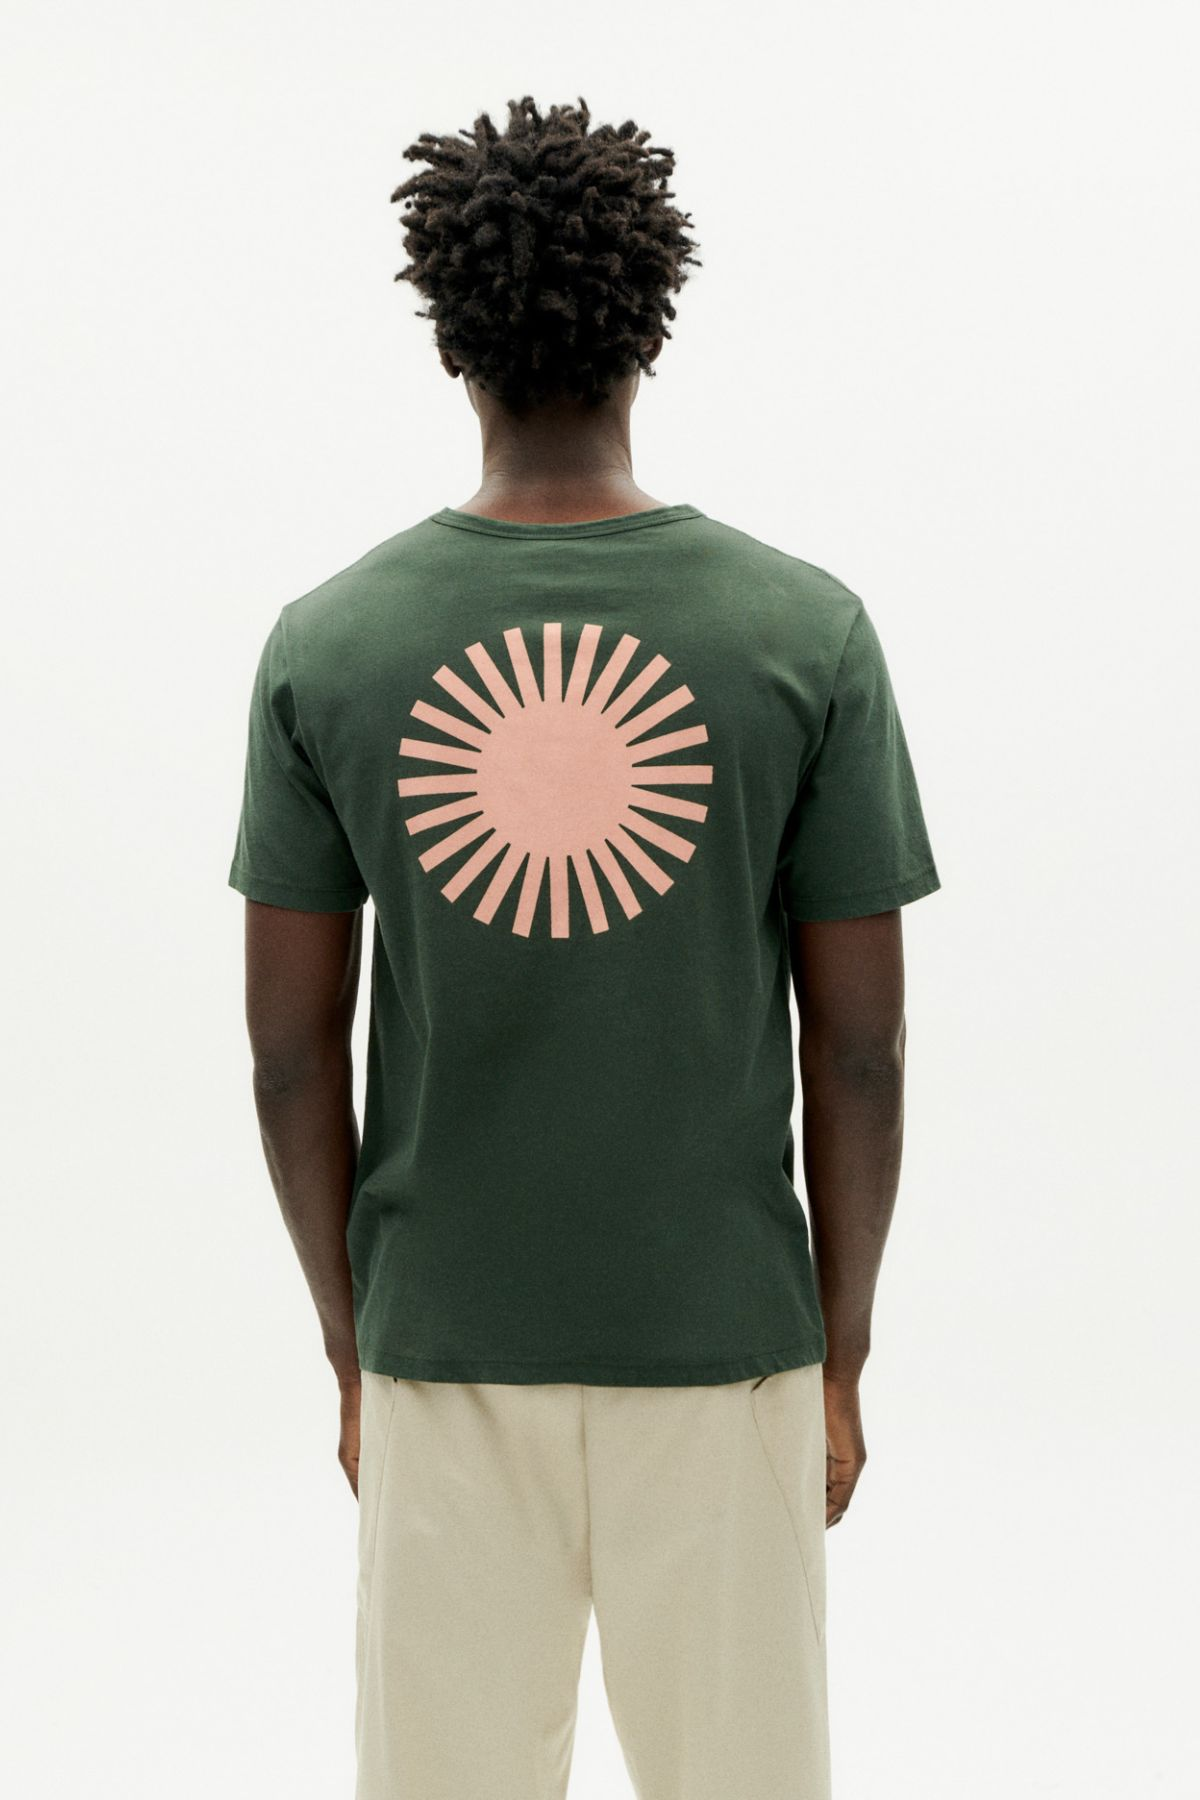 T-shirt coral sol - Thinking mu